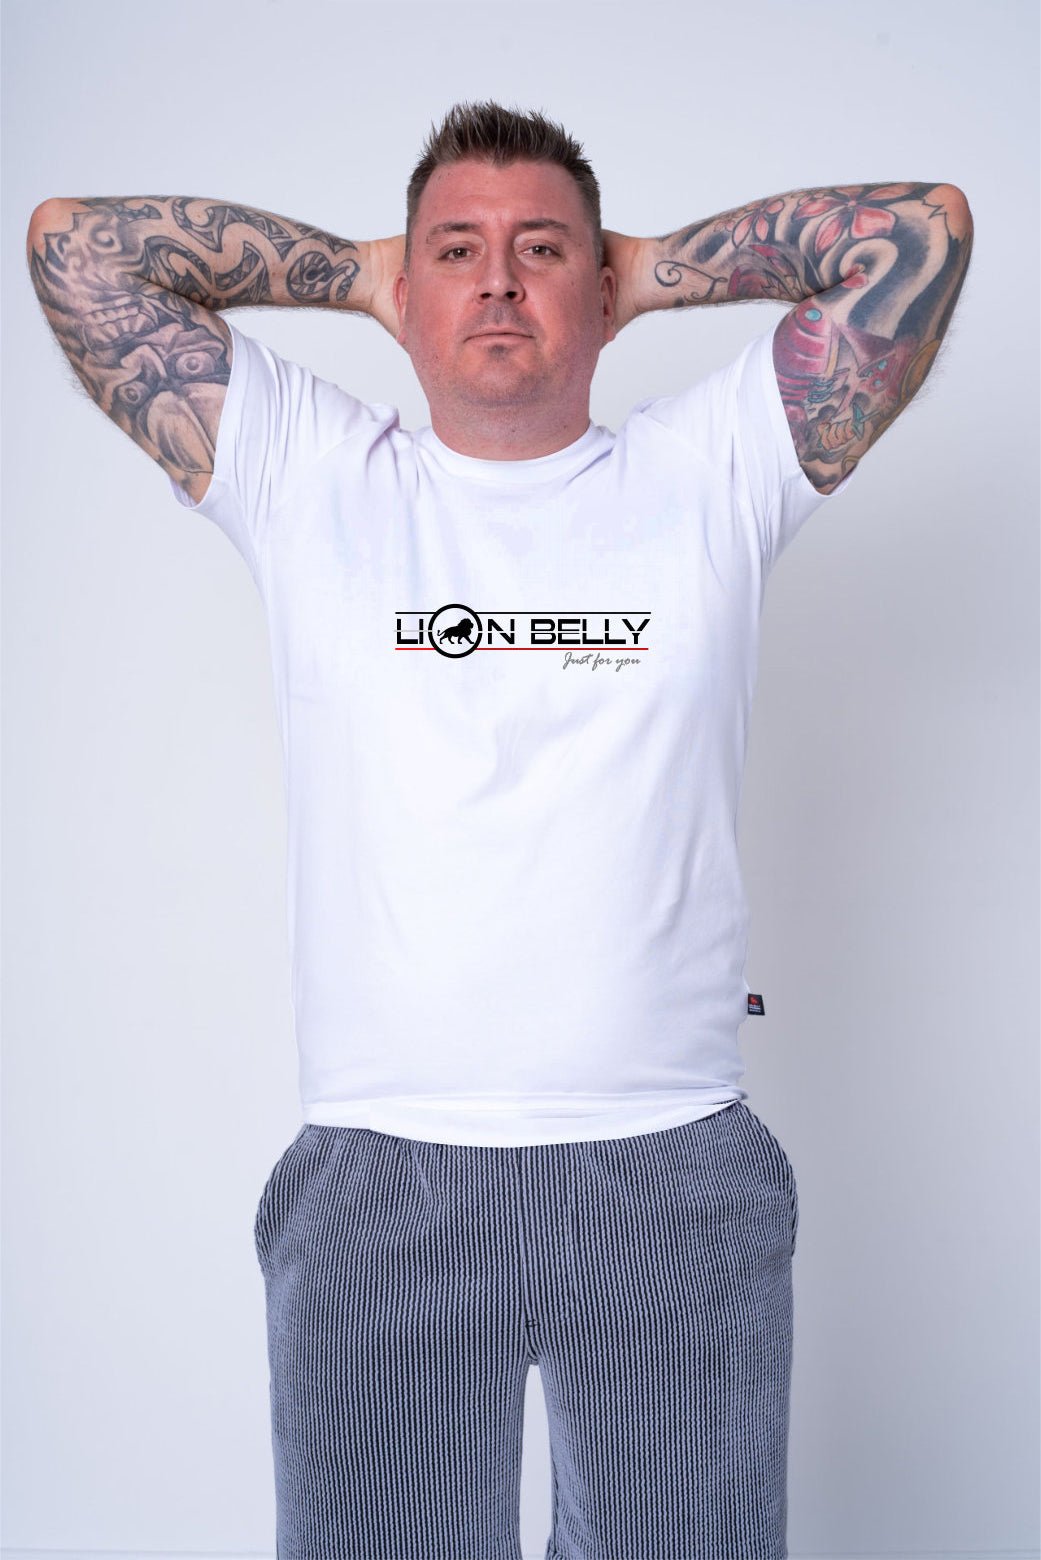 Lion Belly™ Las Vegas - lionbelly